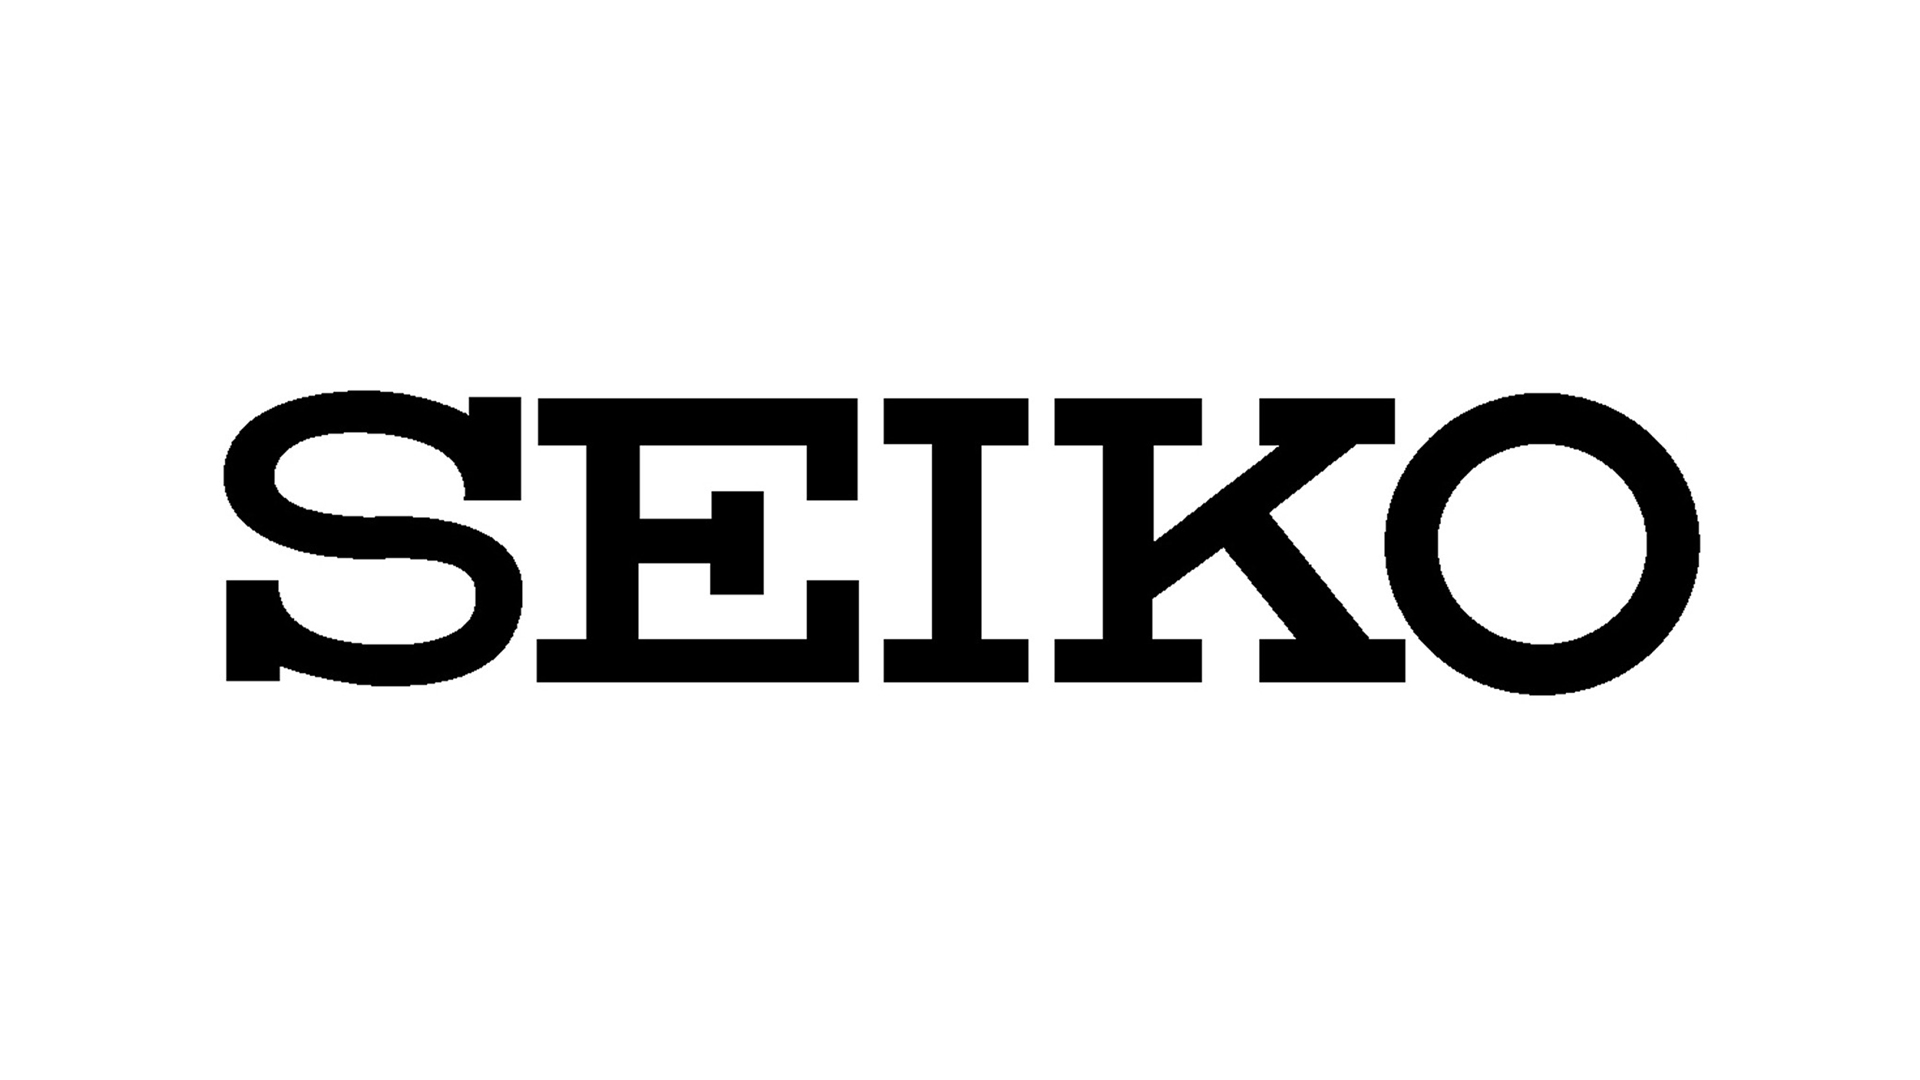 Seiko-1920x1080.jpg